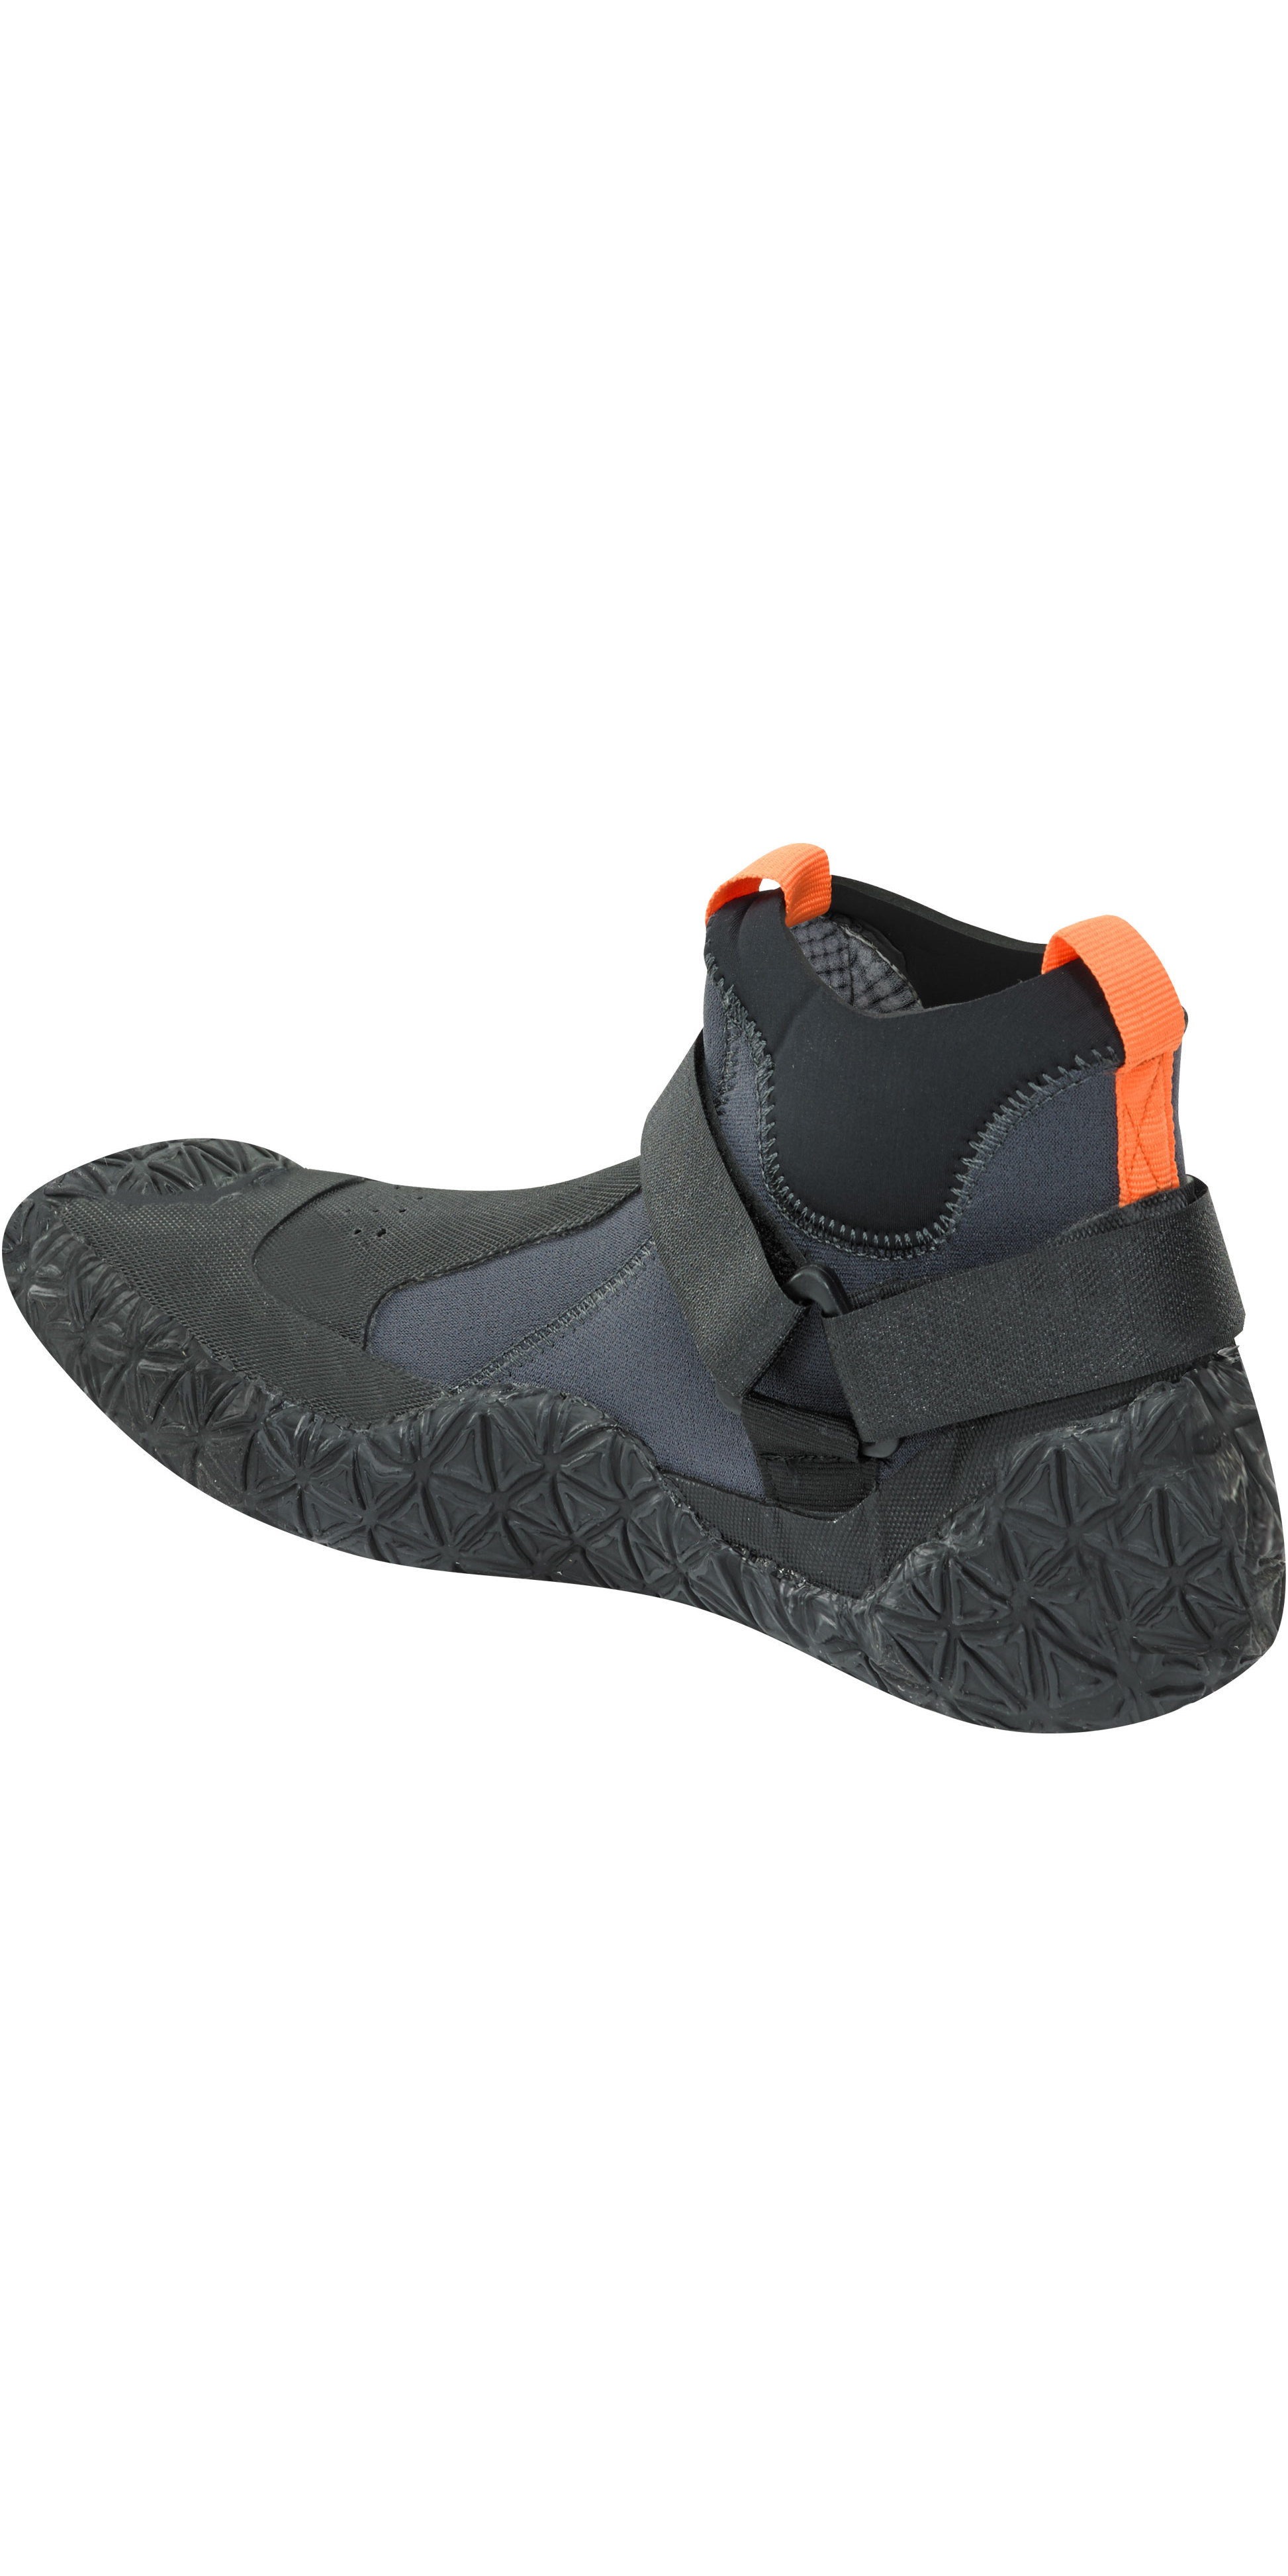 2020 Palm Descender Kayak Shoes 12340 - Jet Grey - Accessories ...